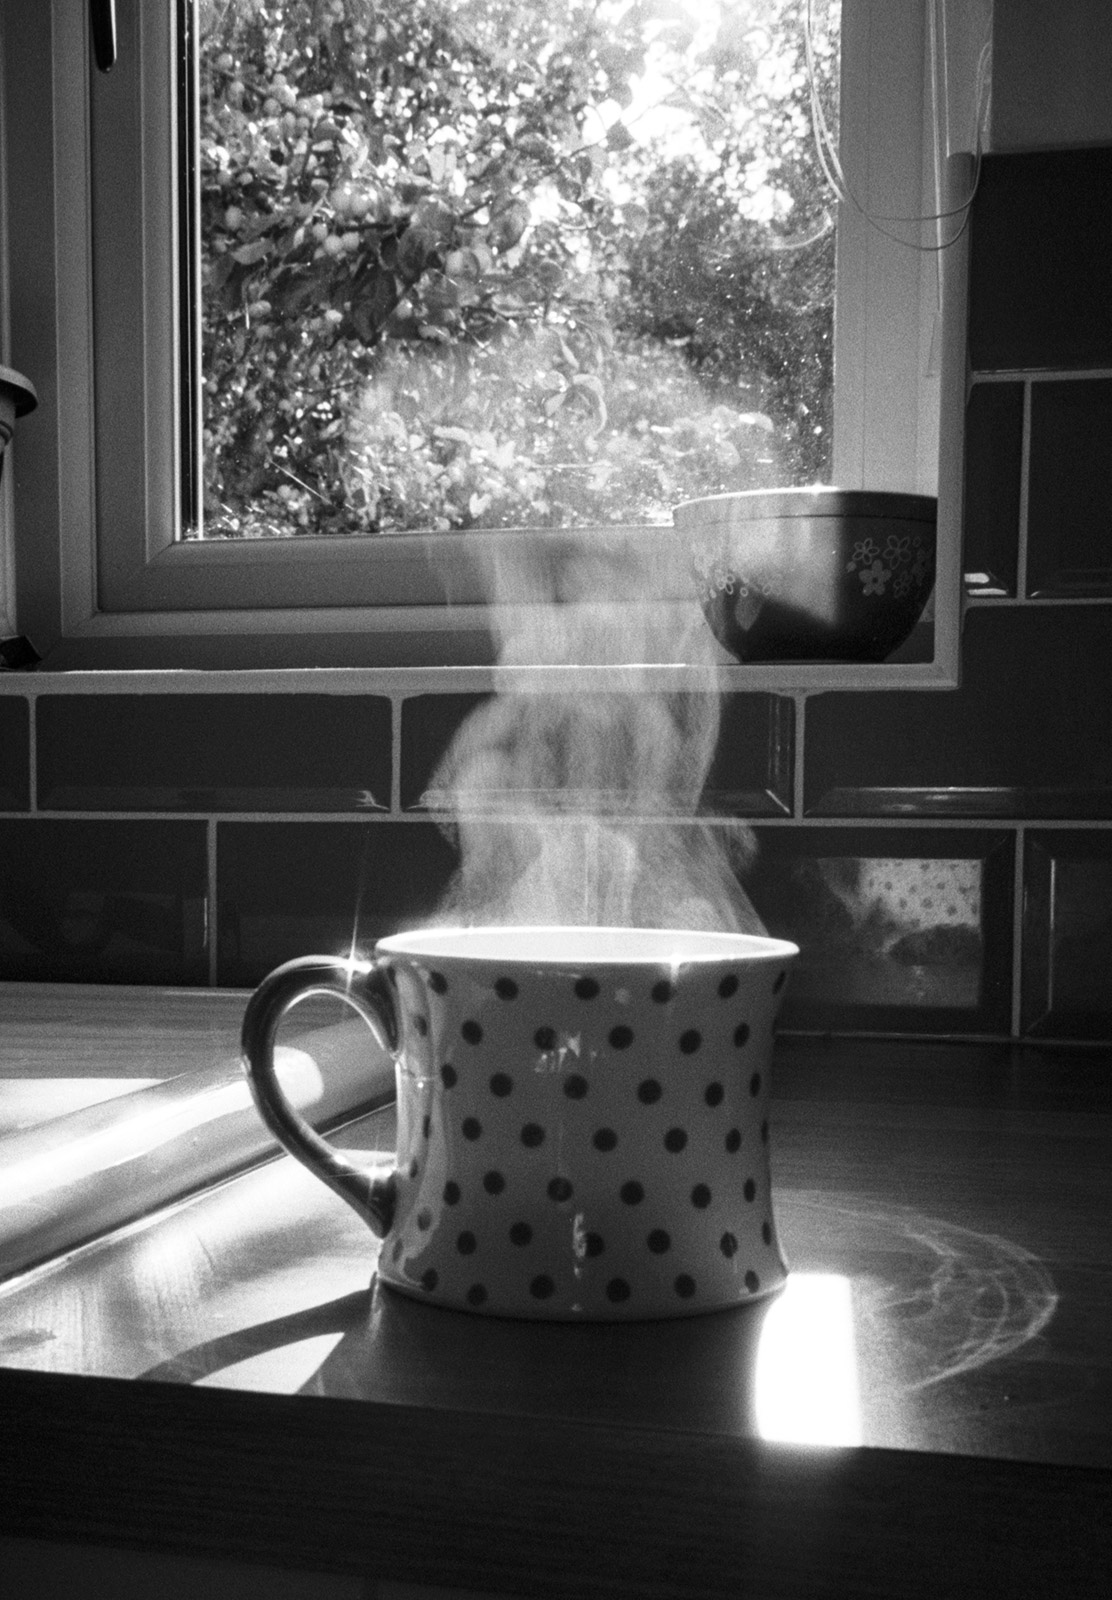 Steaming tea